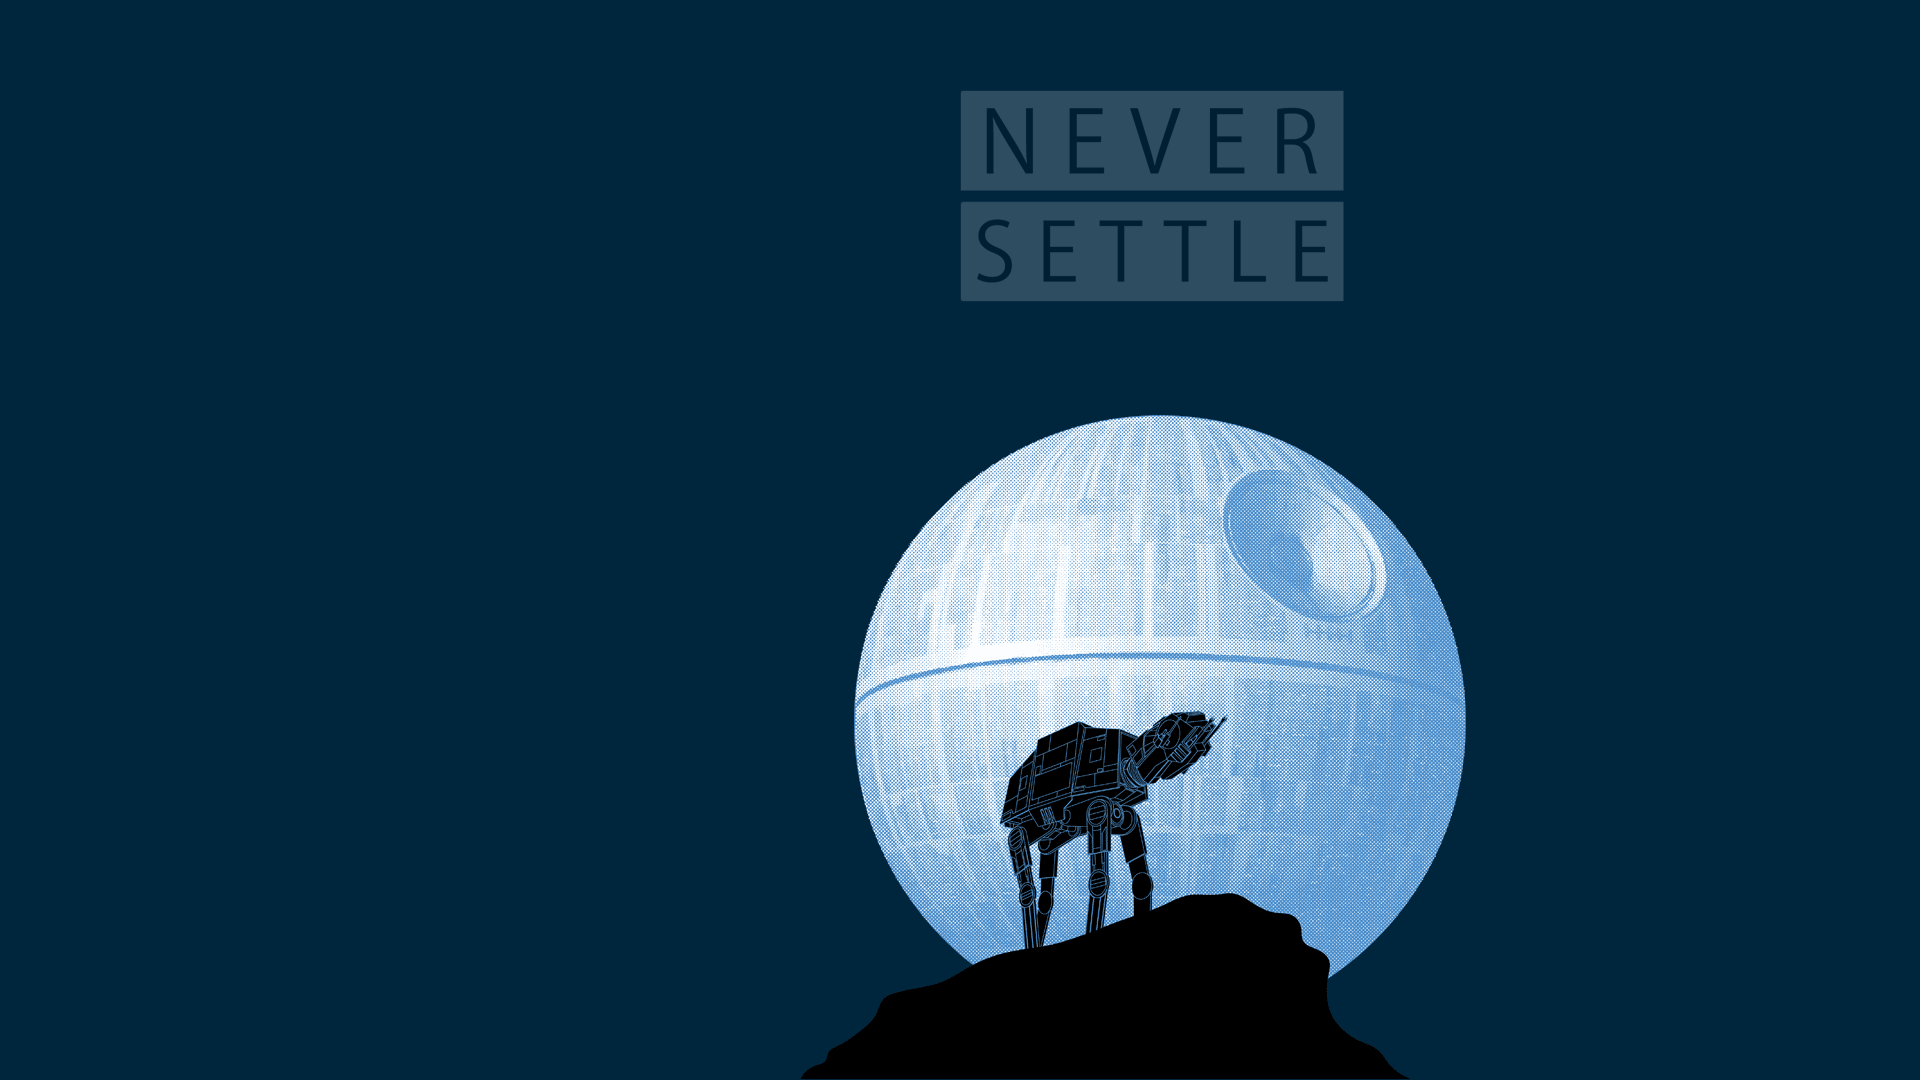 I created some Star Wars themed Never Settle Wallpaper